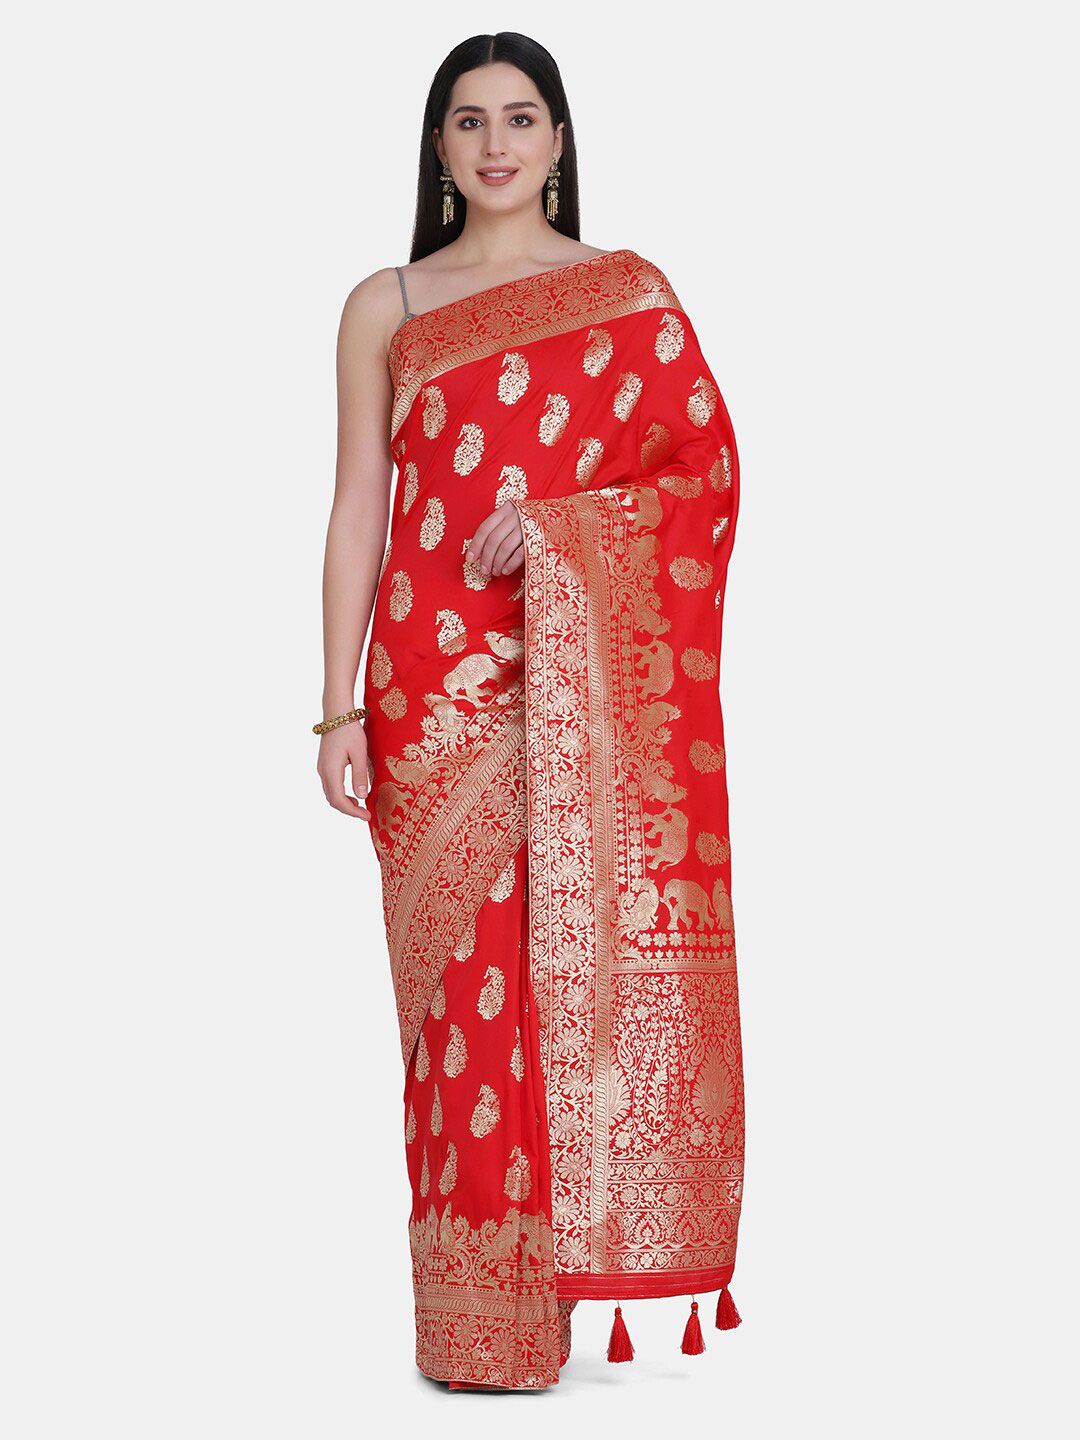 BOMBAY SELECTIONS Red & Gold-Toned Woven Design Zari Pure Silk Banarasi Saree Price in India